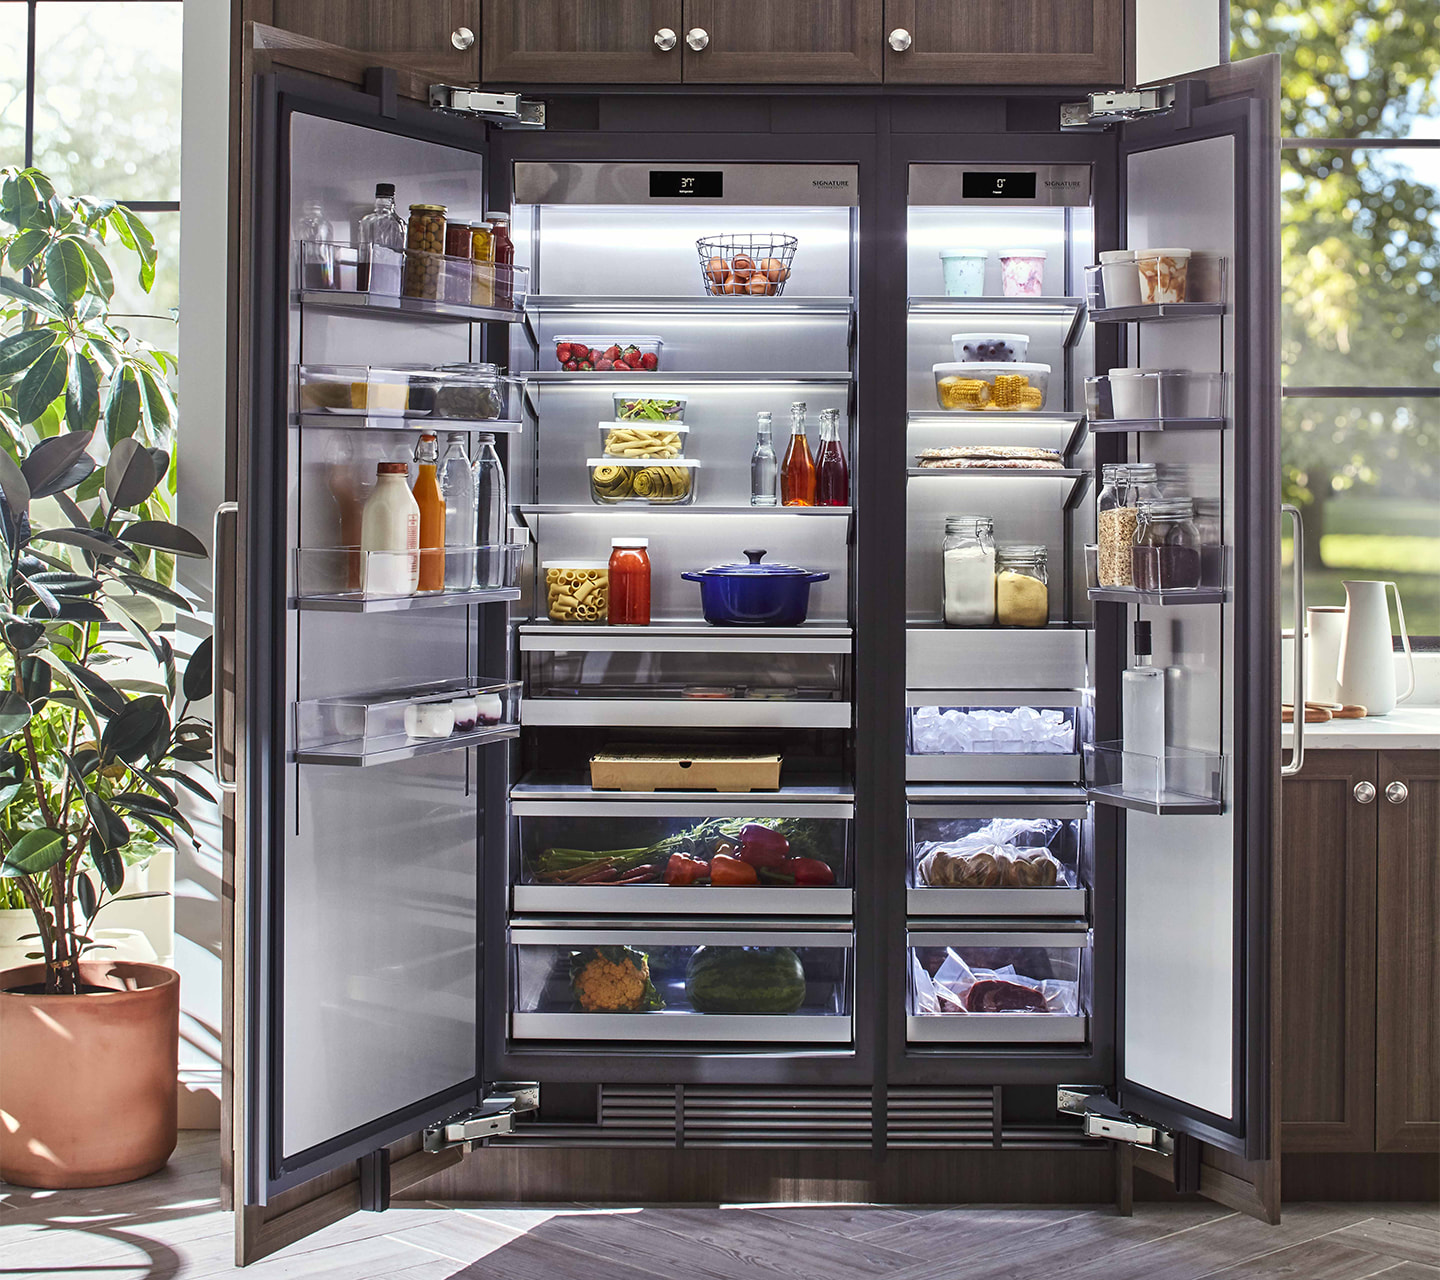 30 Beautiful Refrigerator Design Ideas